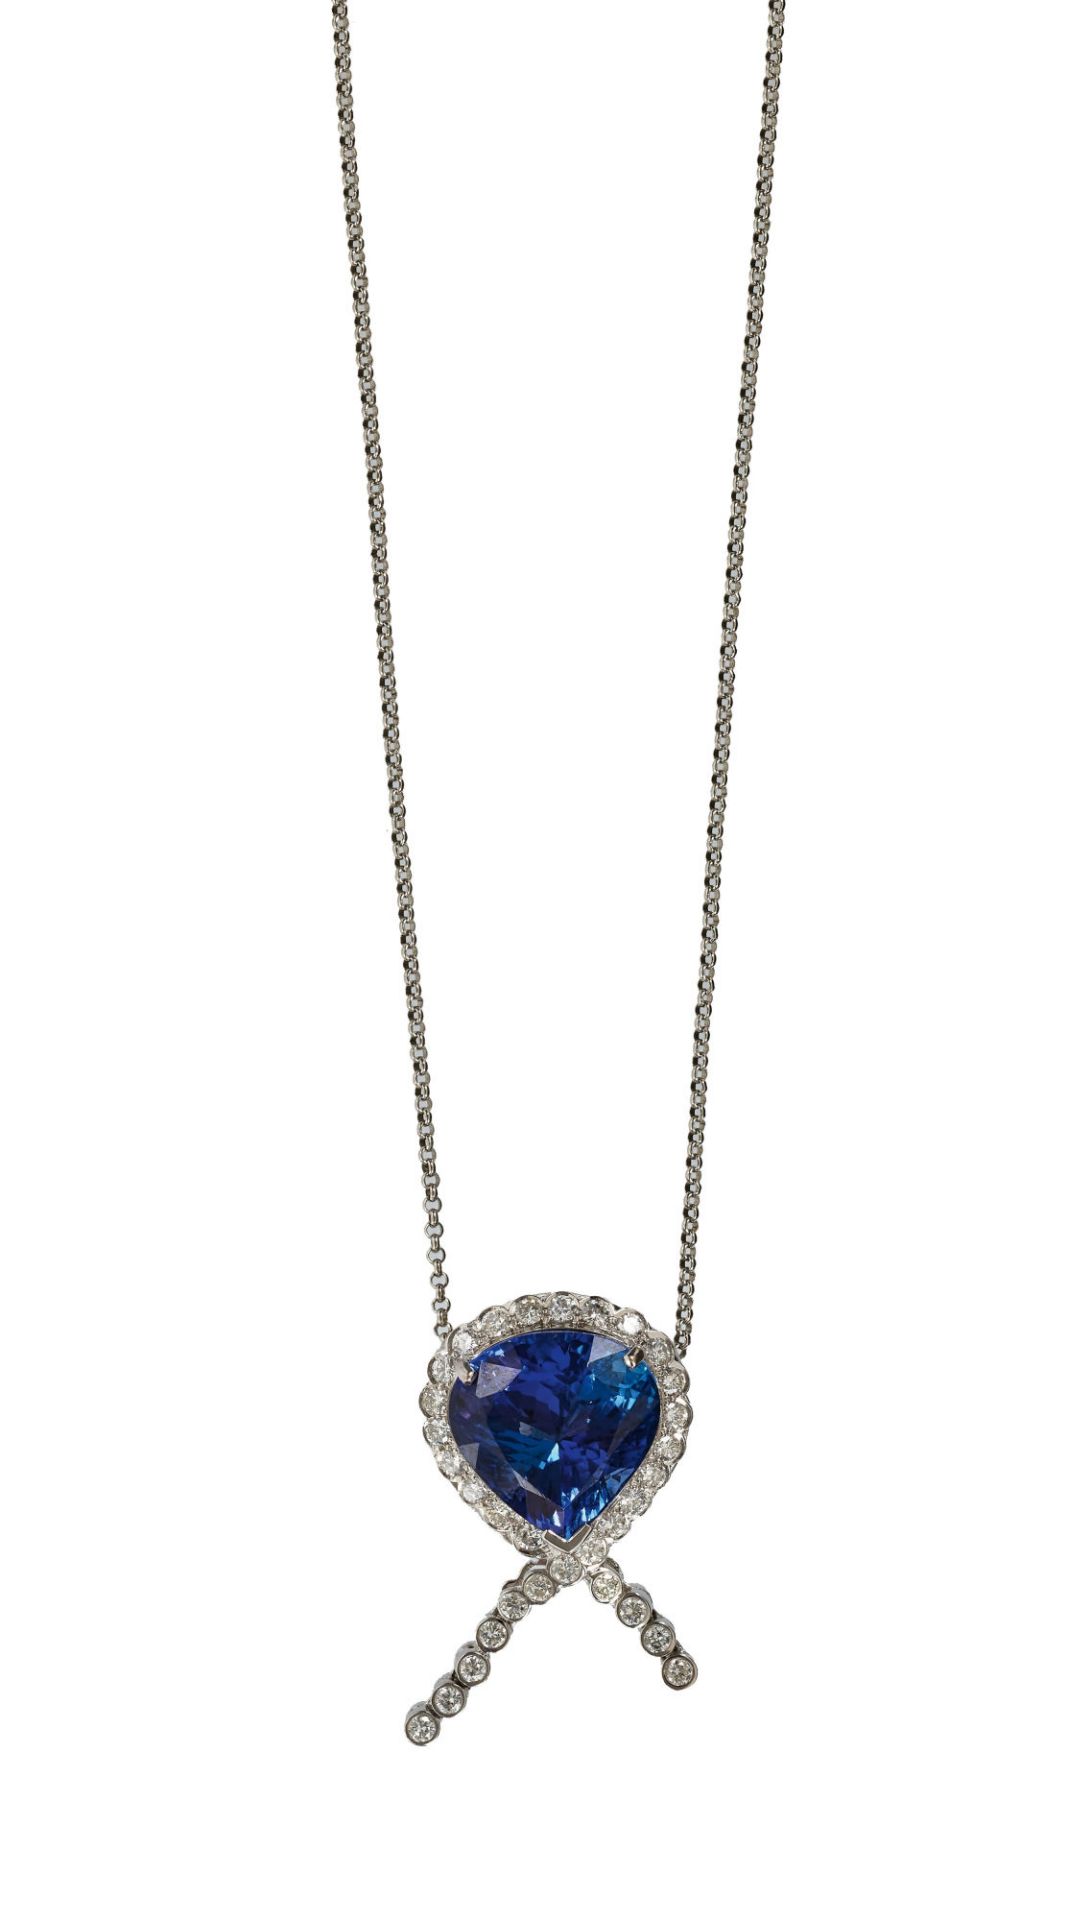 TANSANIT-BRILLANT-ANHÄNGER MIT KETTE / Tanzanite-diamond-pendant necklace  - Bild 2 aus 2